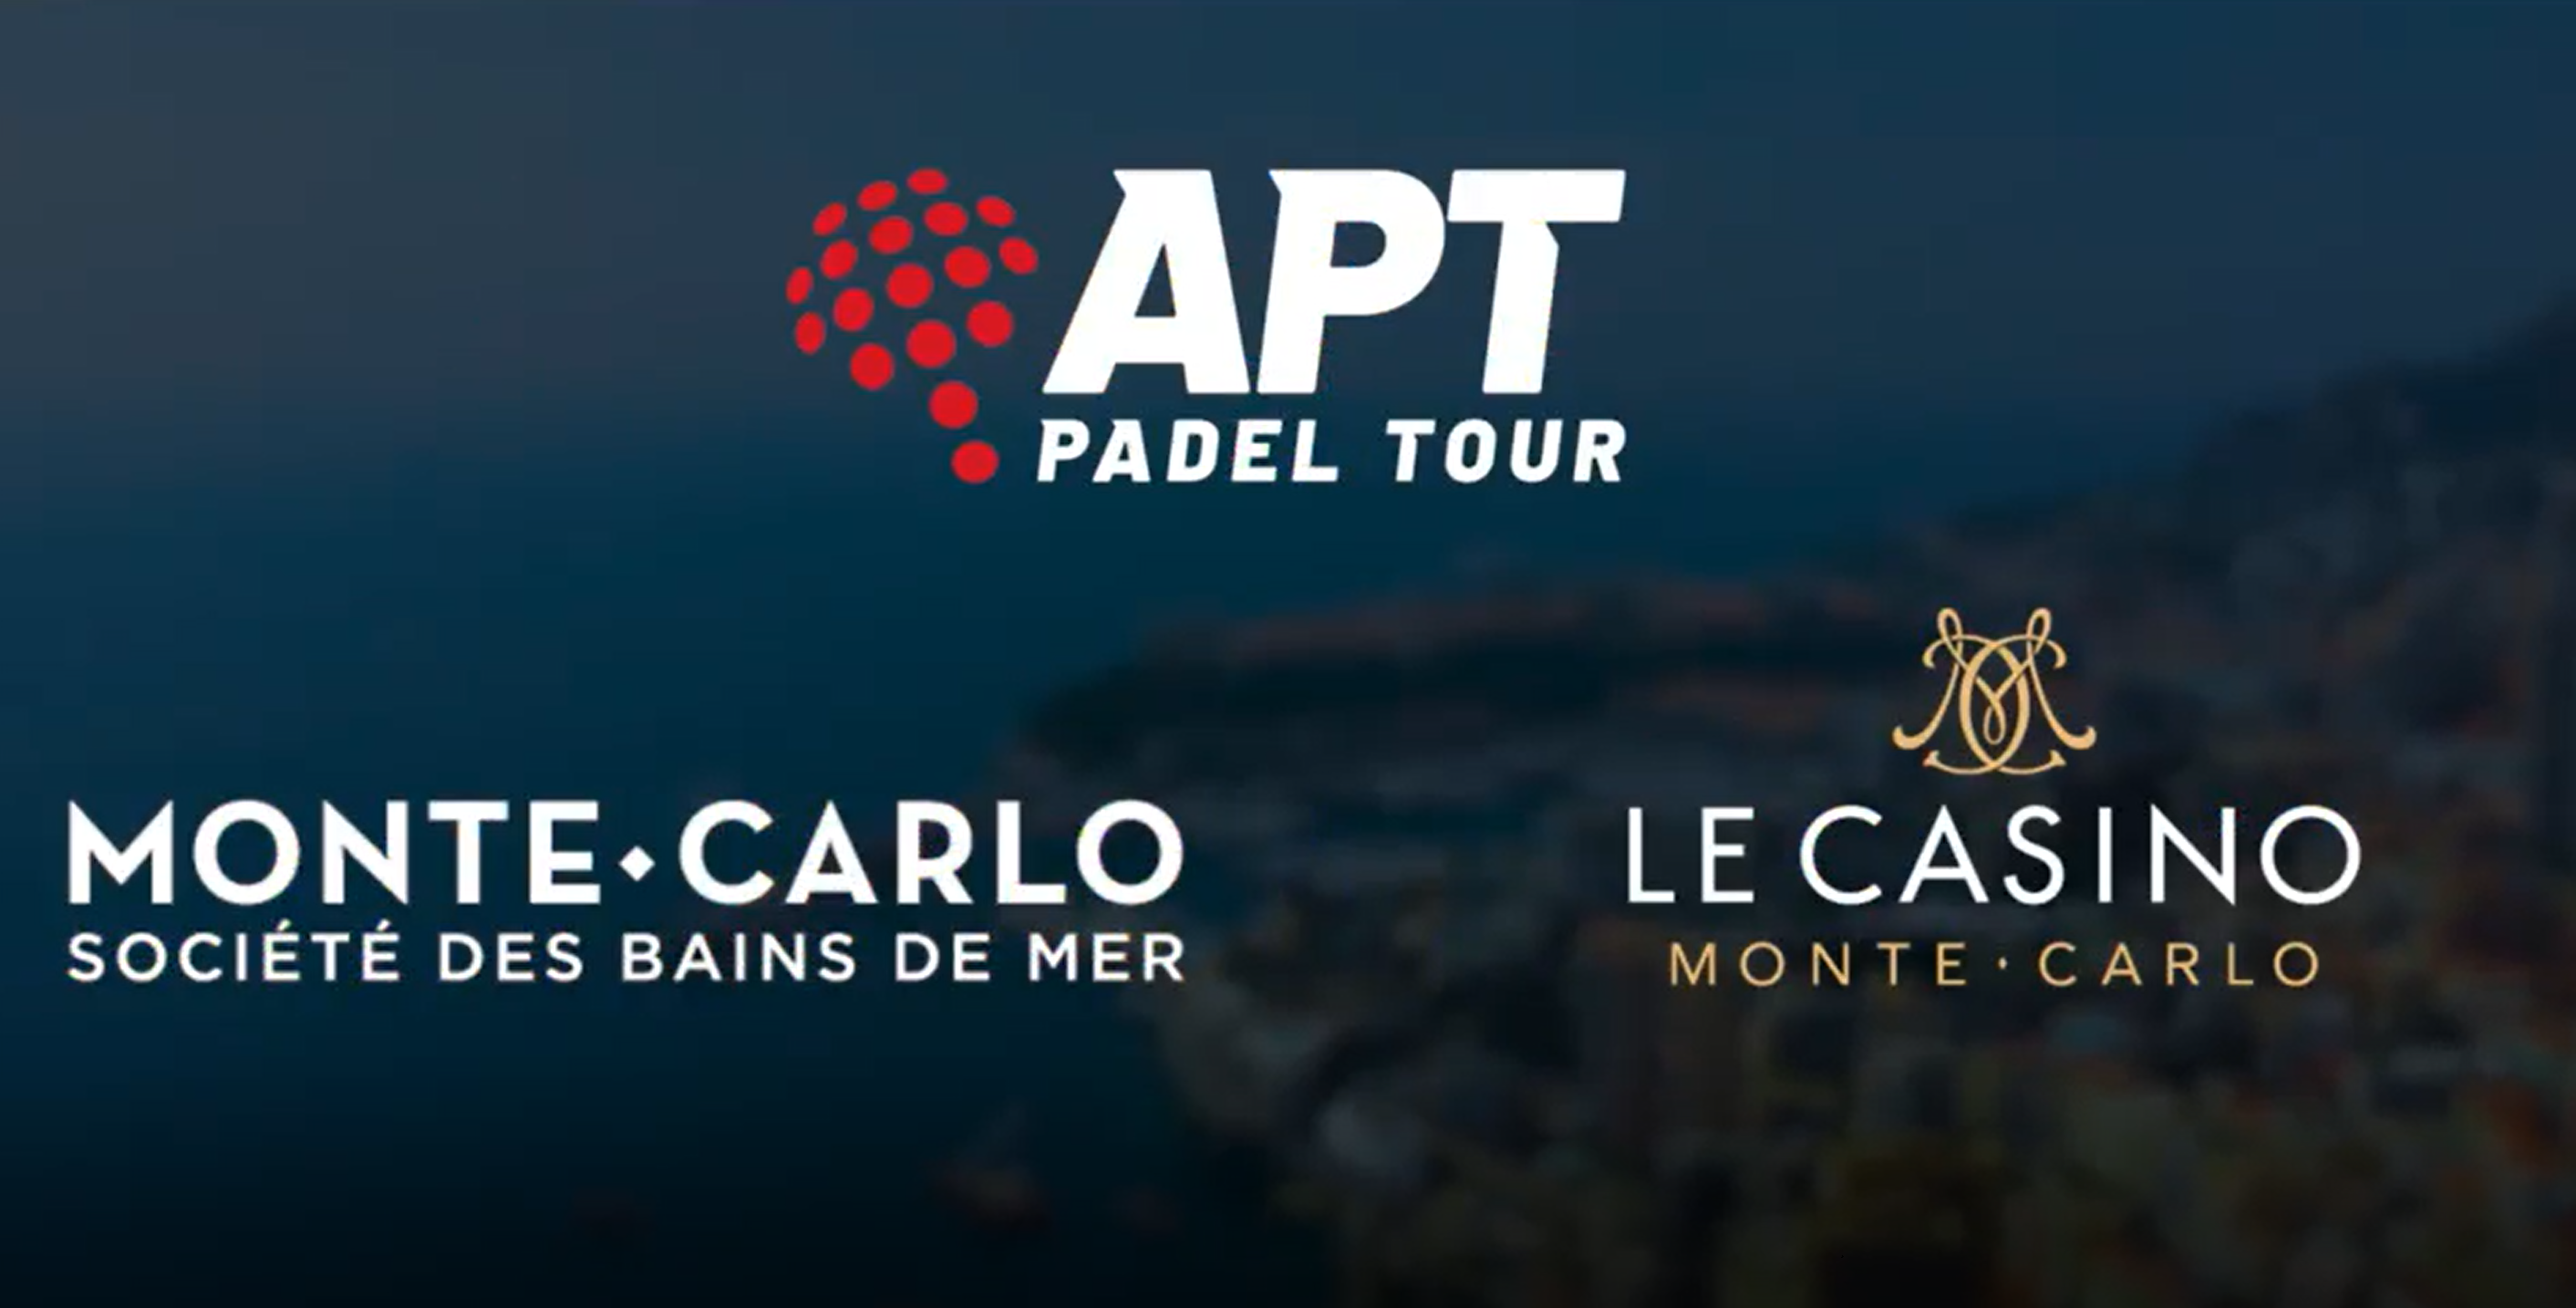 APT Padel Tour Monaco: it's going to be hot!